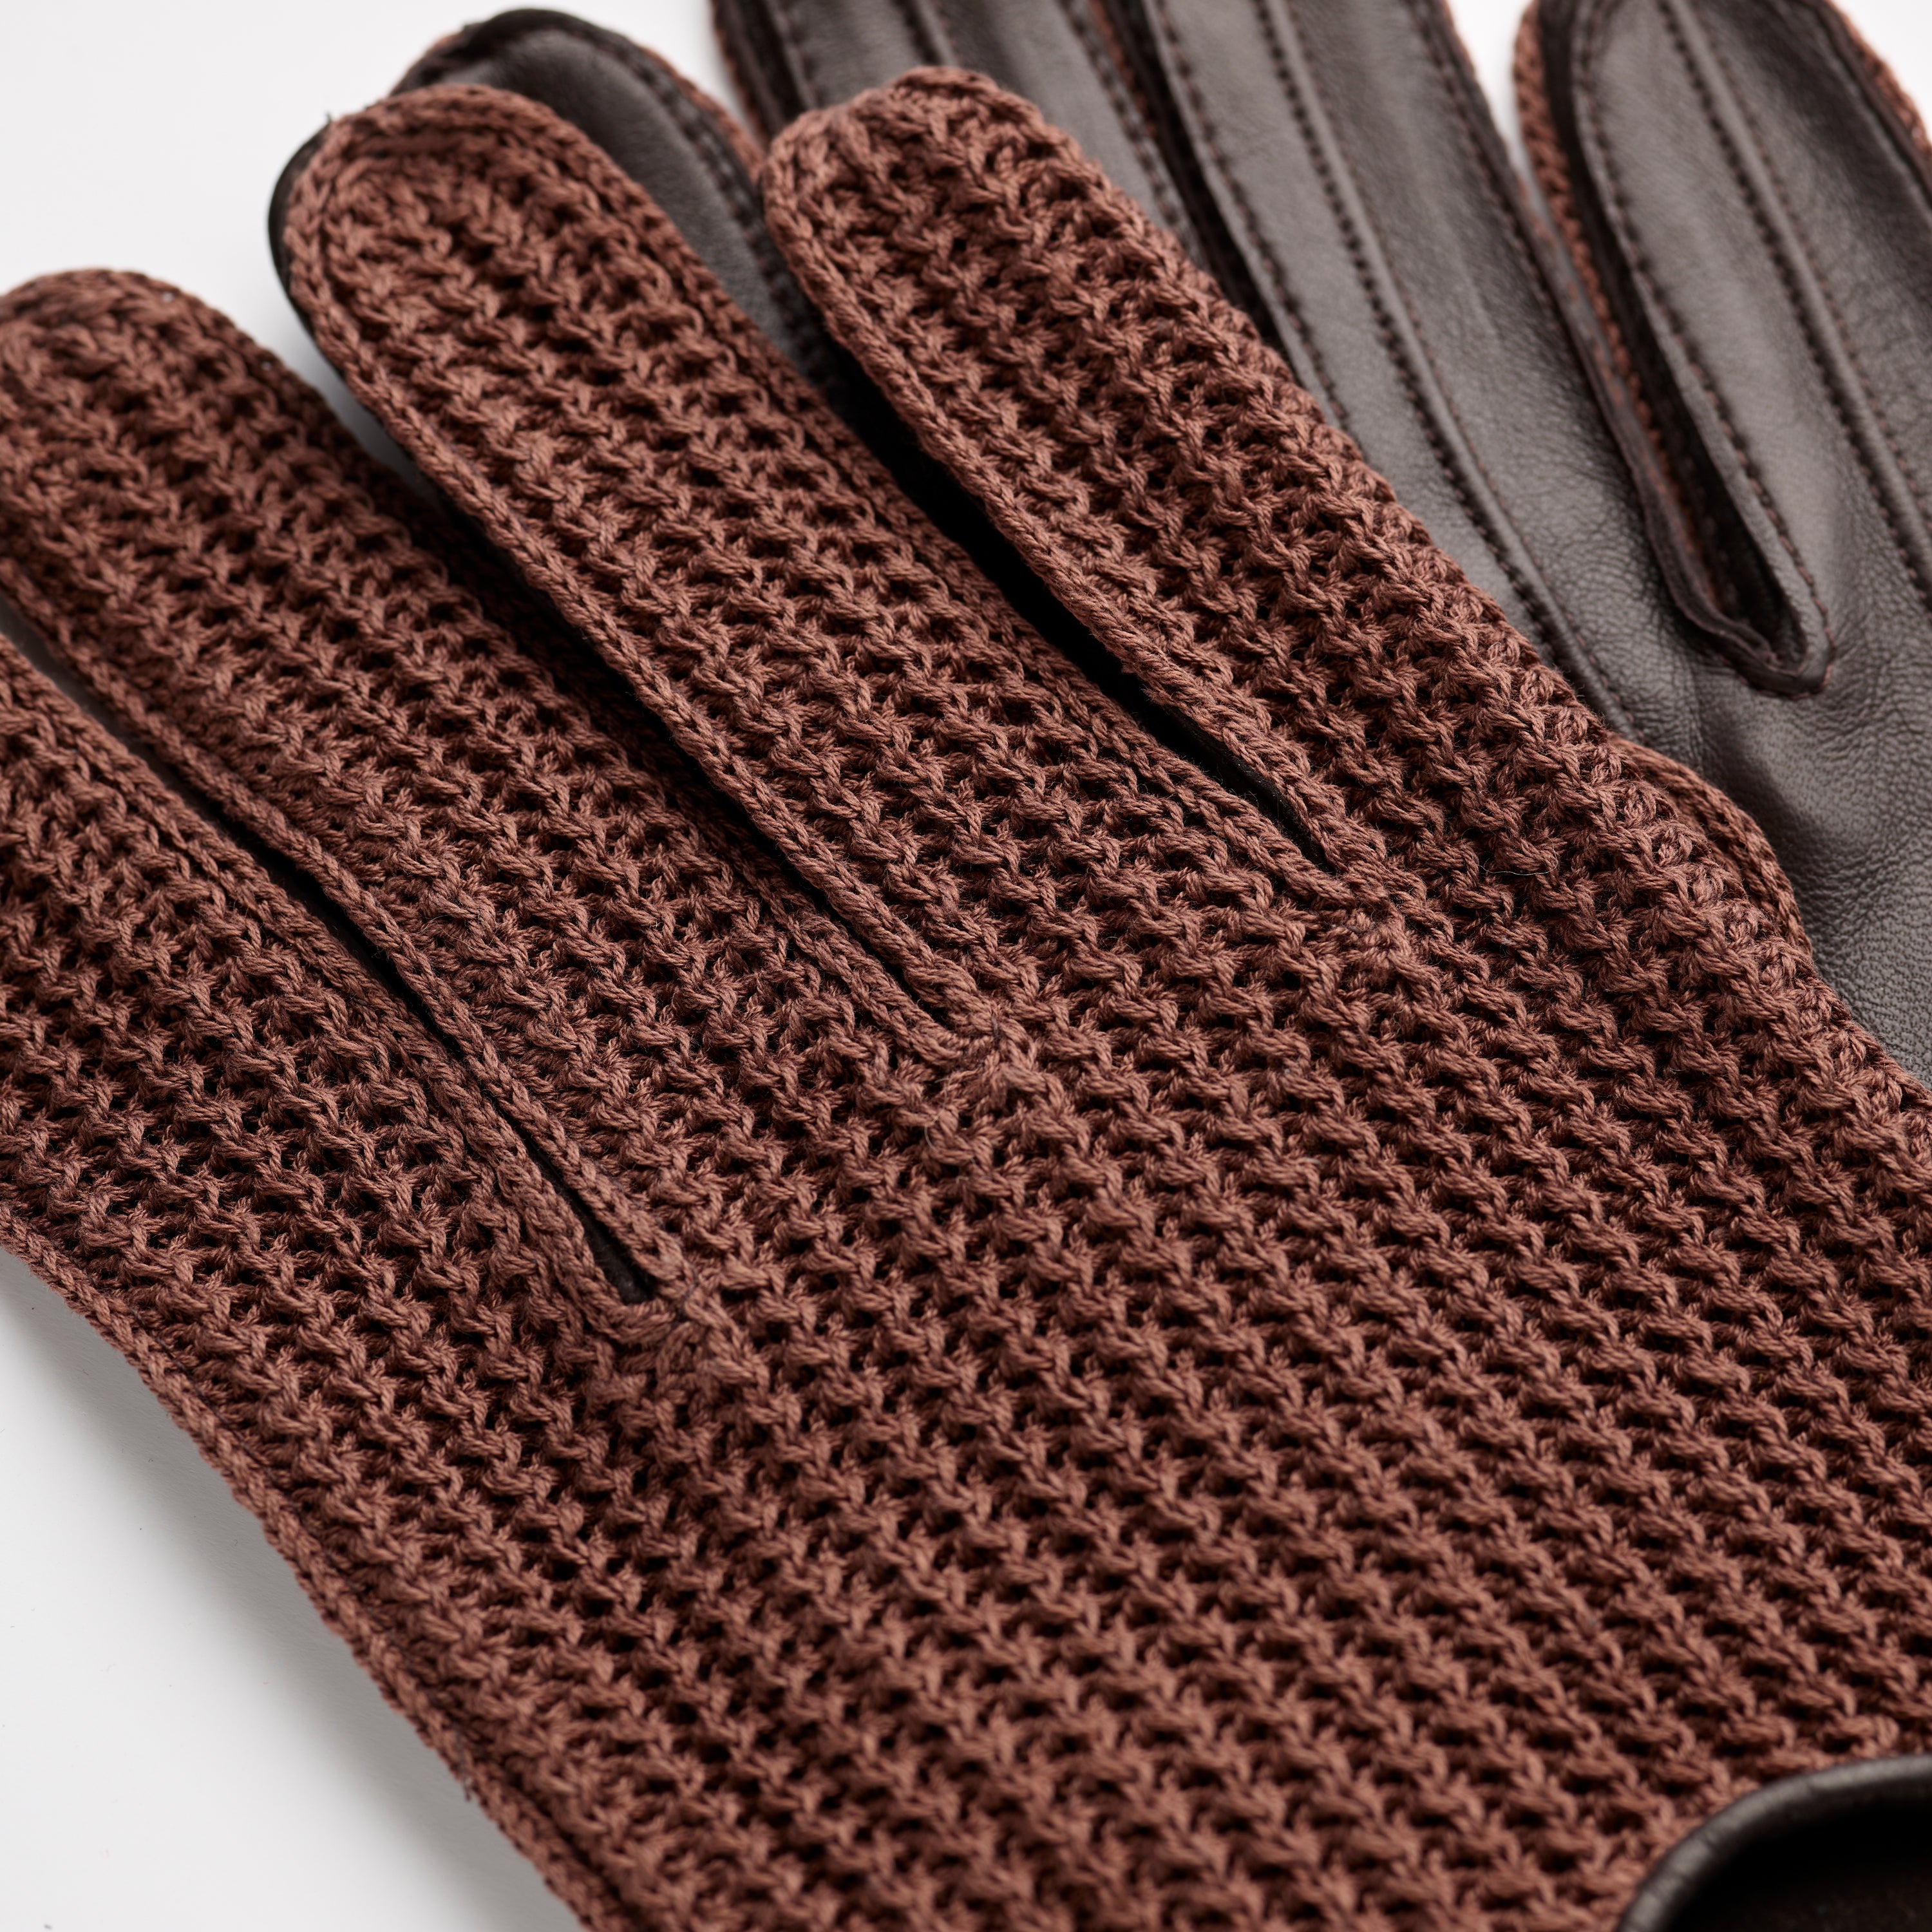 Fox Nappa Lambskin Leather Driving Gloves